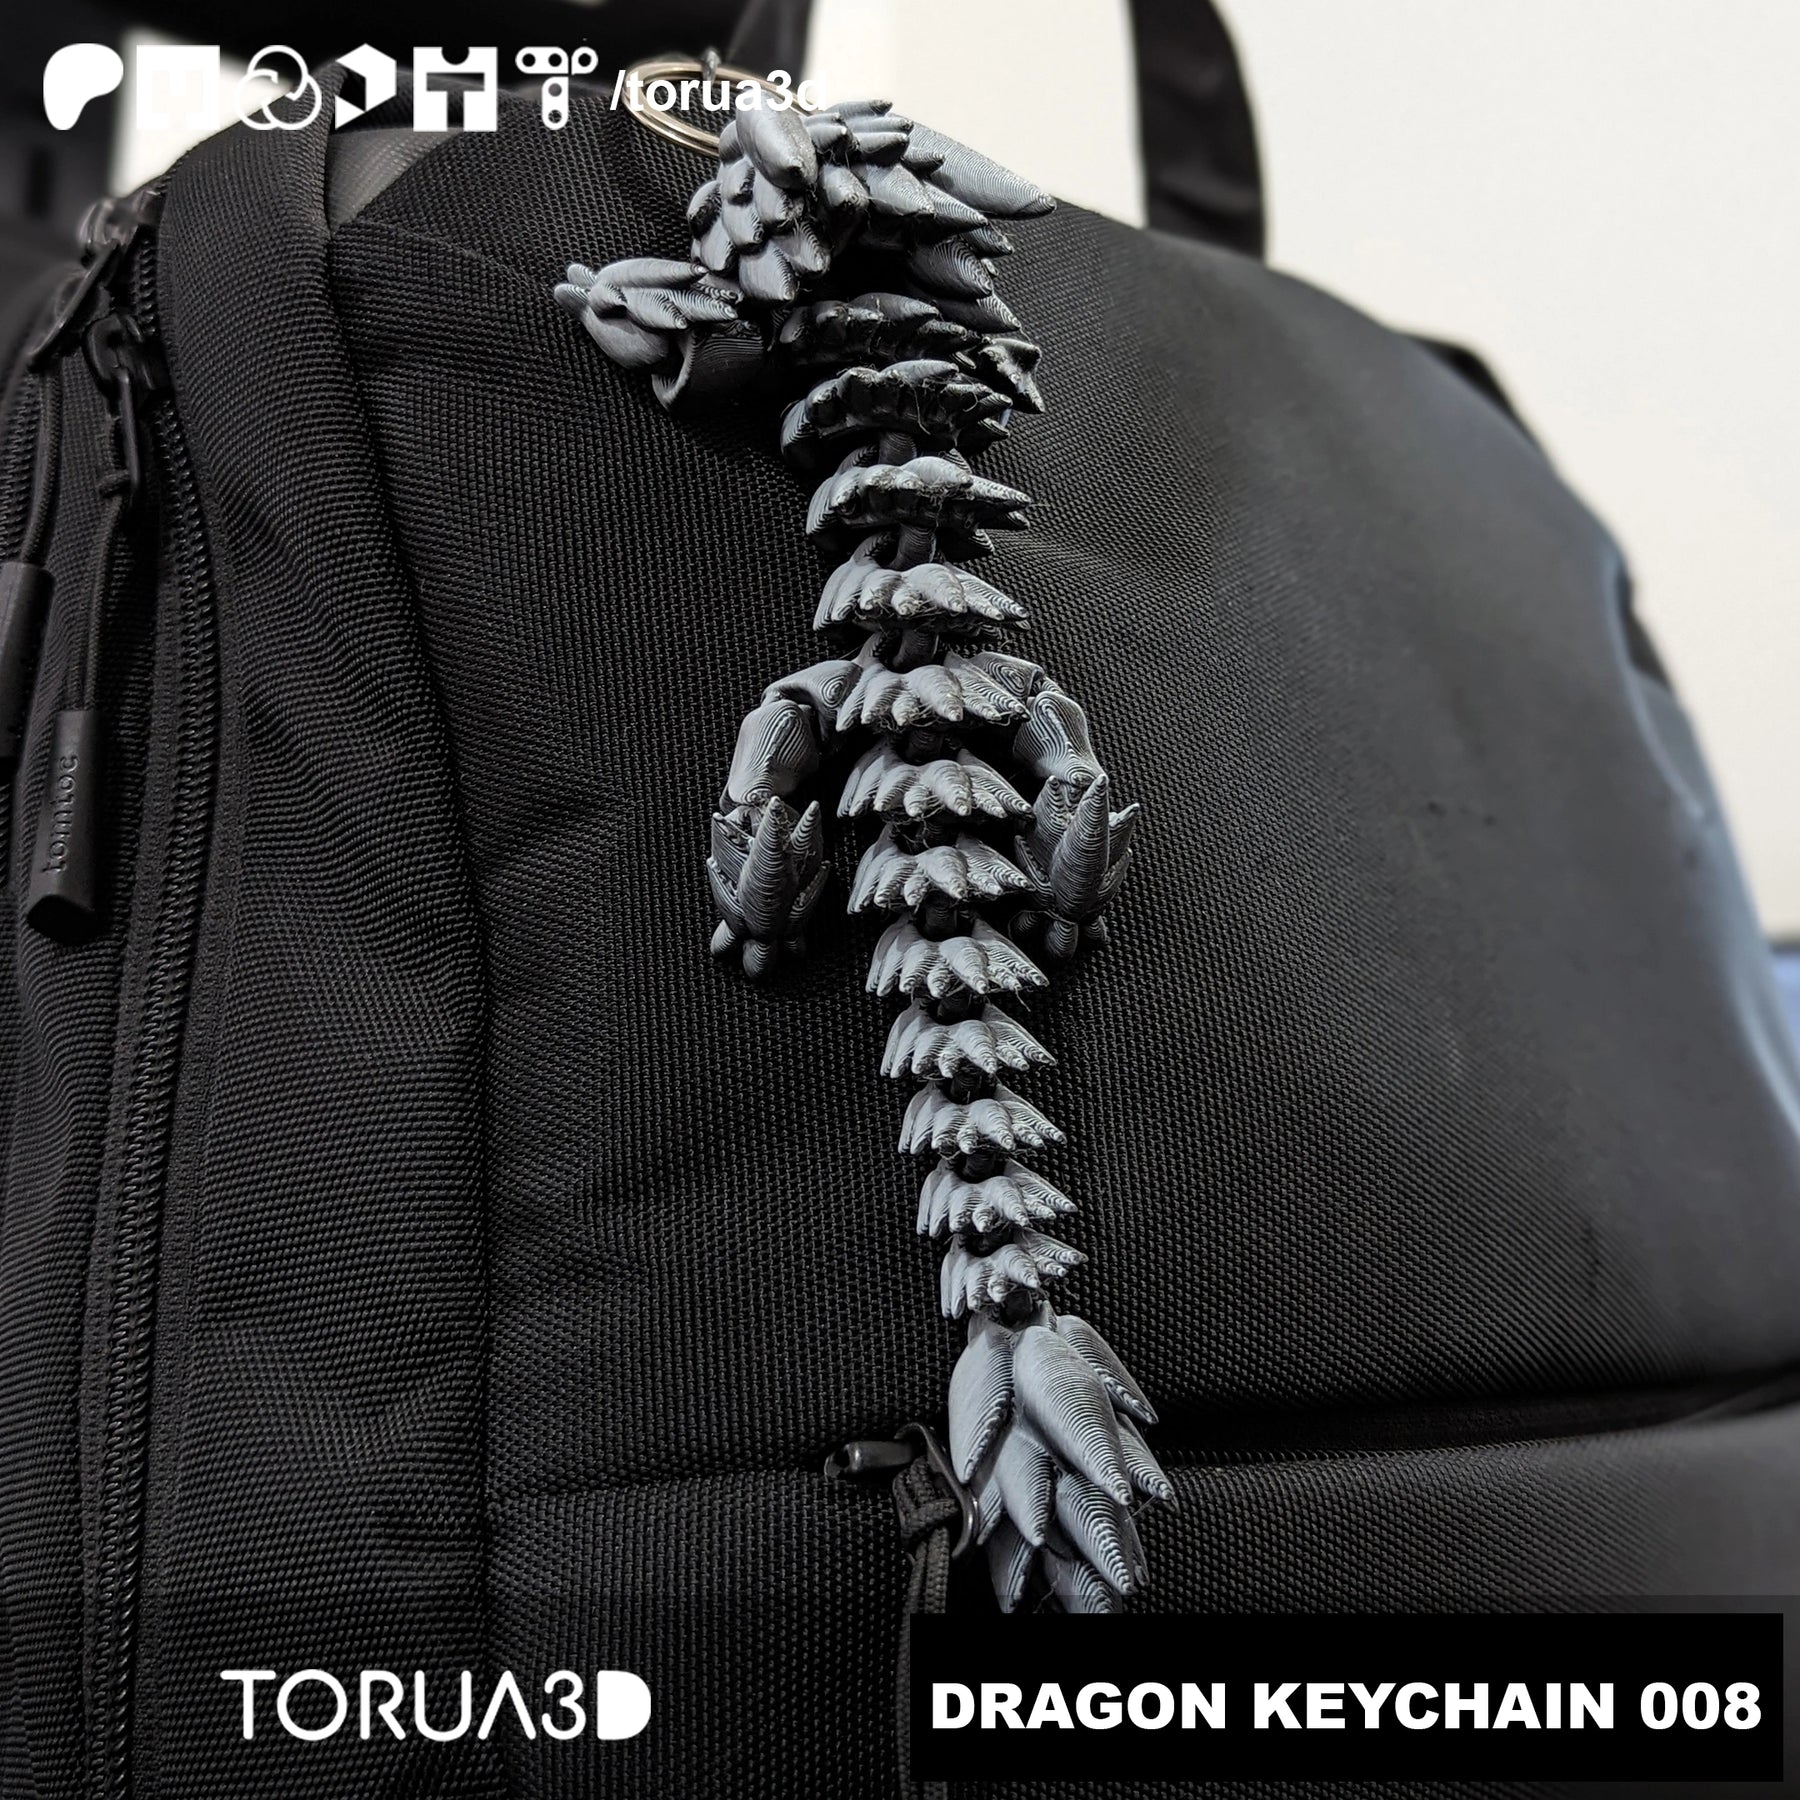 Articulated Dragon Keychain 008